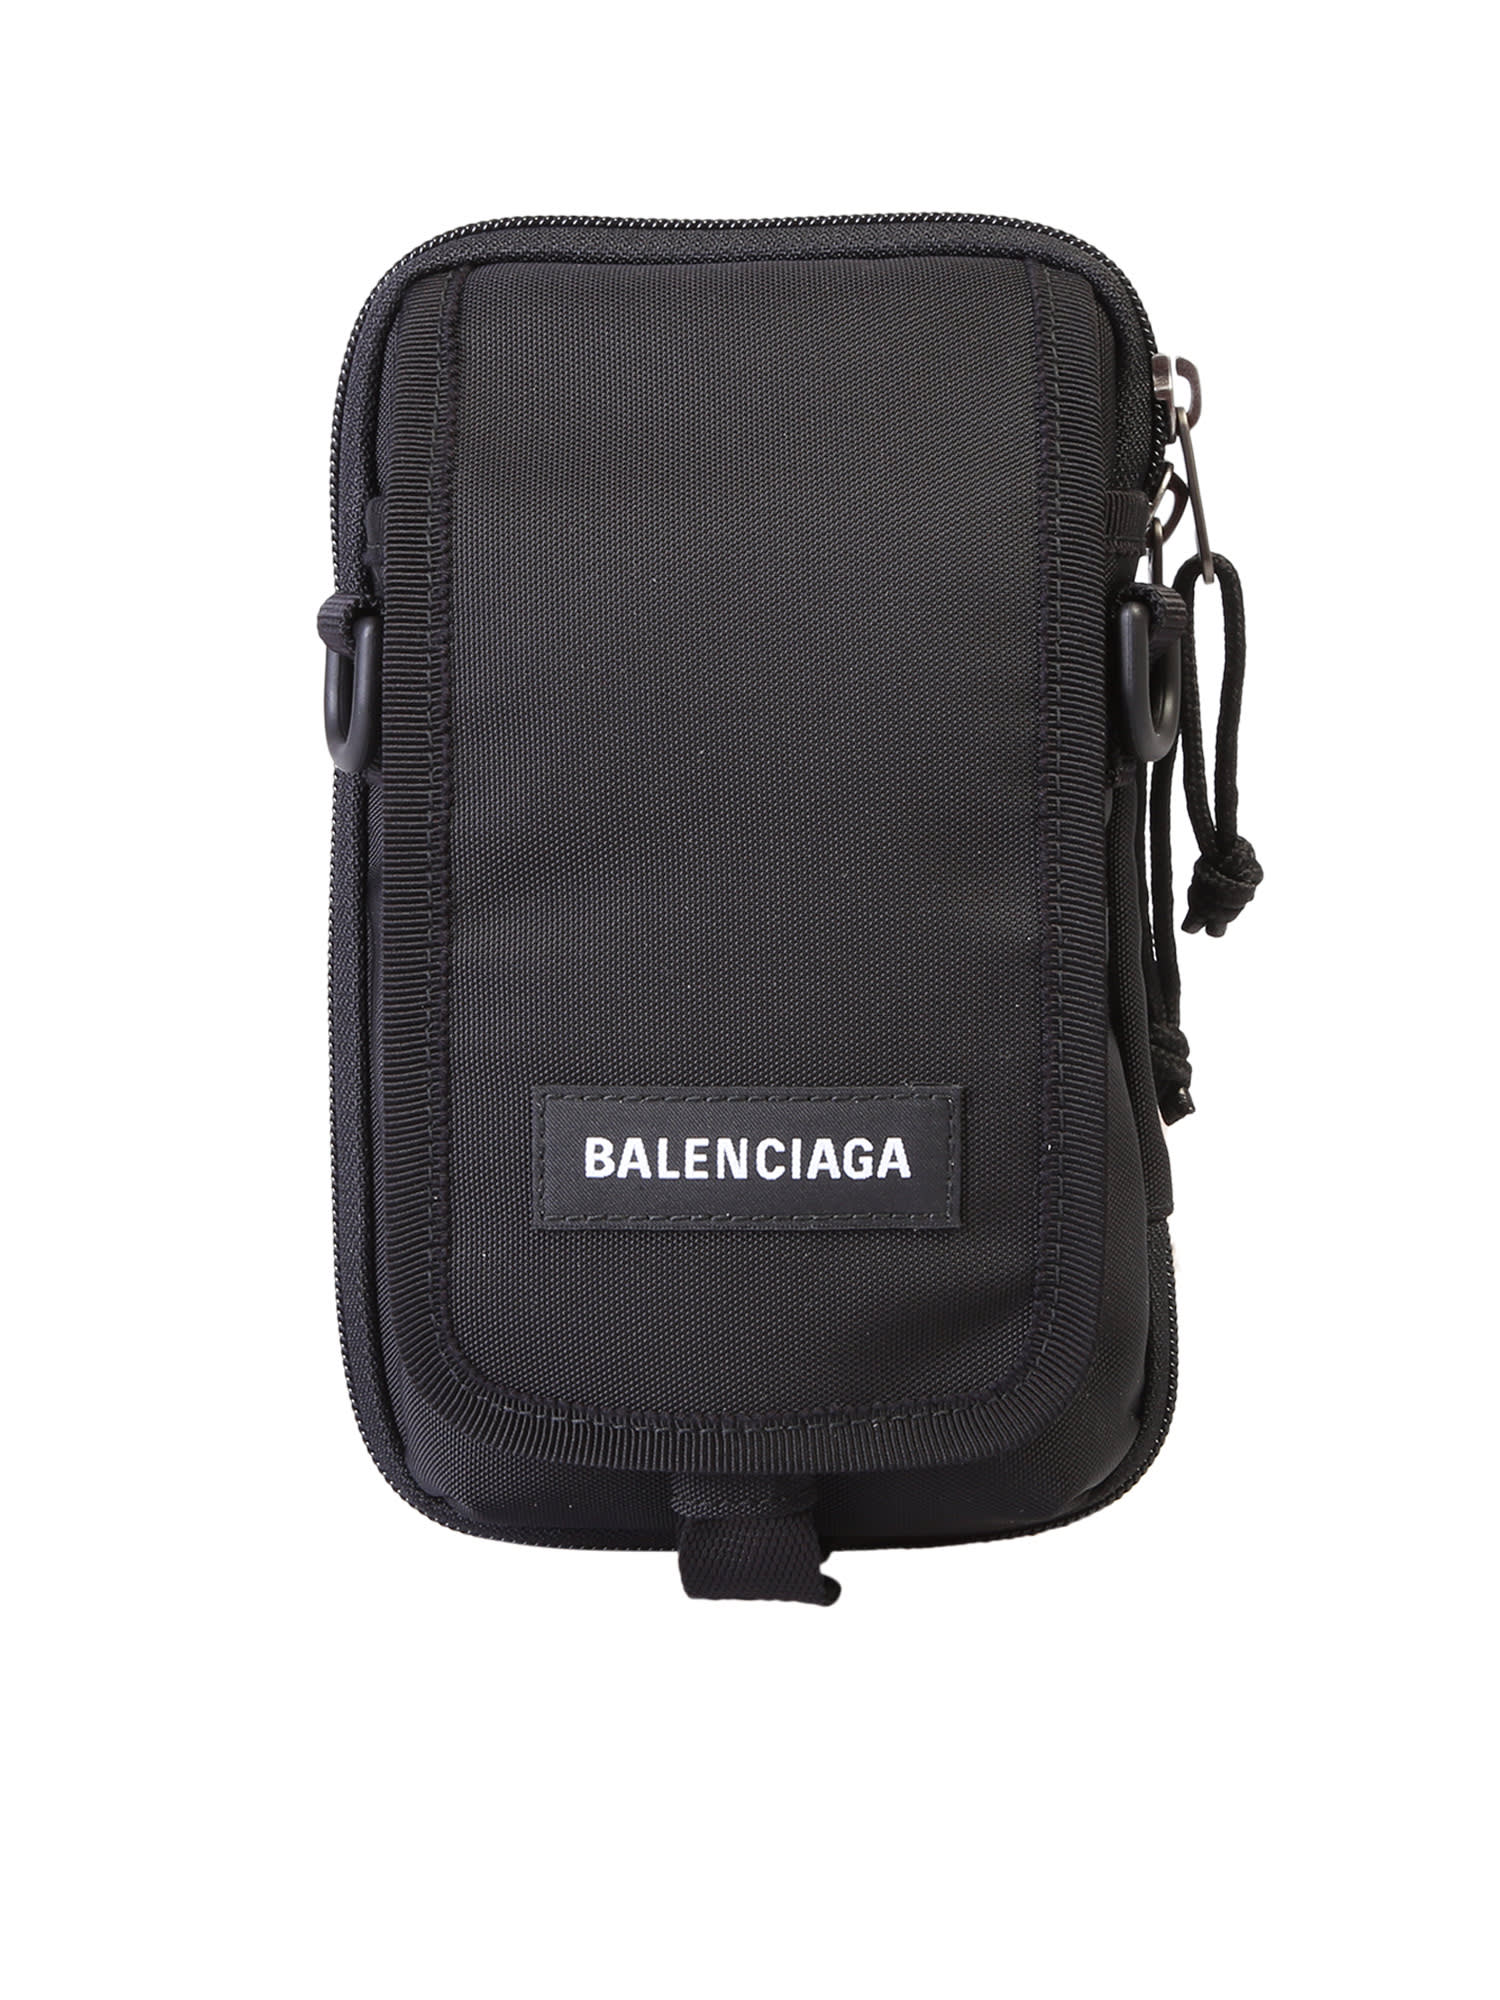 Balenciaga Branded Bag In Black